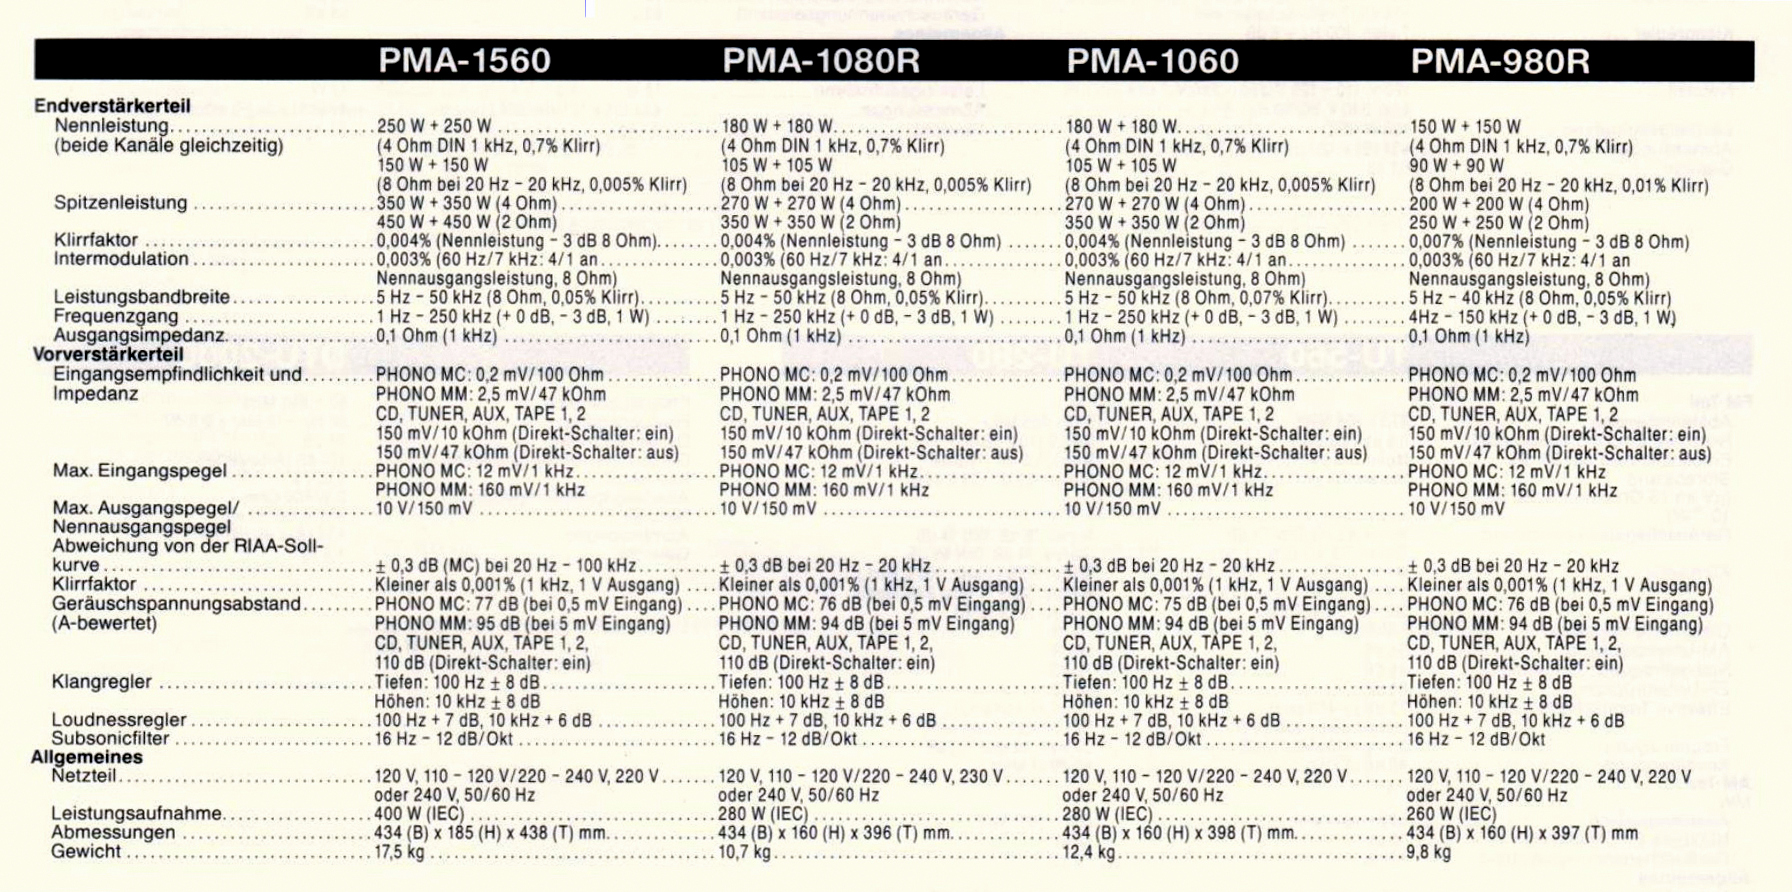 Denon PMA-980 R-1060-1080 R-1560-Daten-1992.jpg